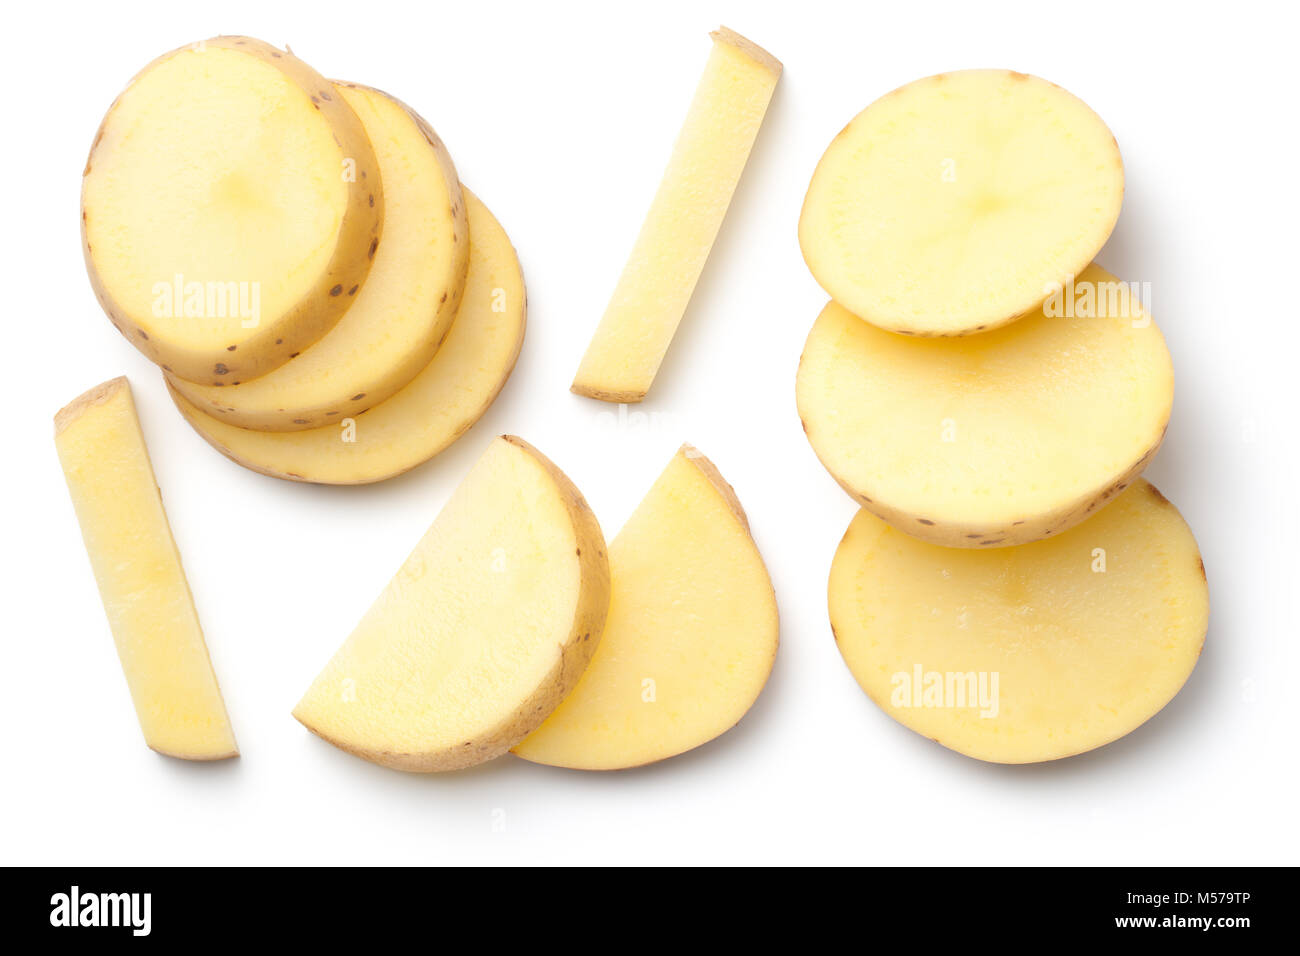 Potato isolated on white background. Top view Stock Photo